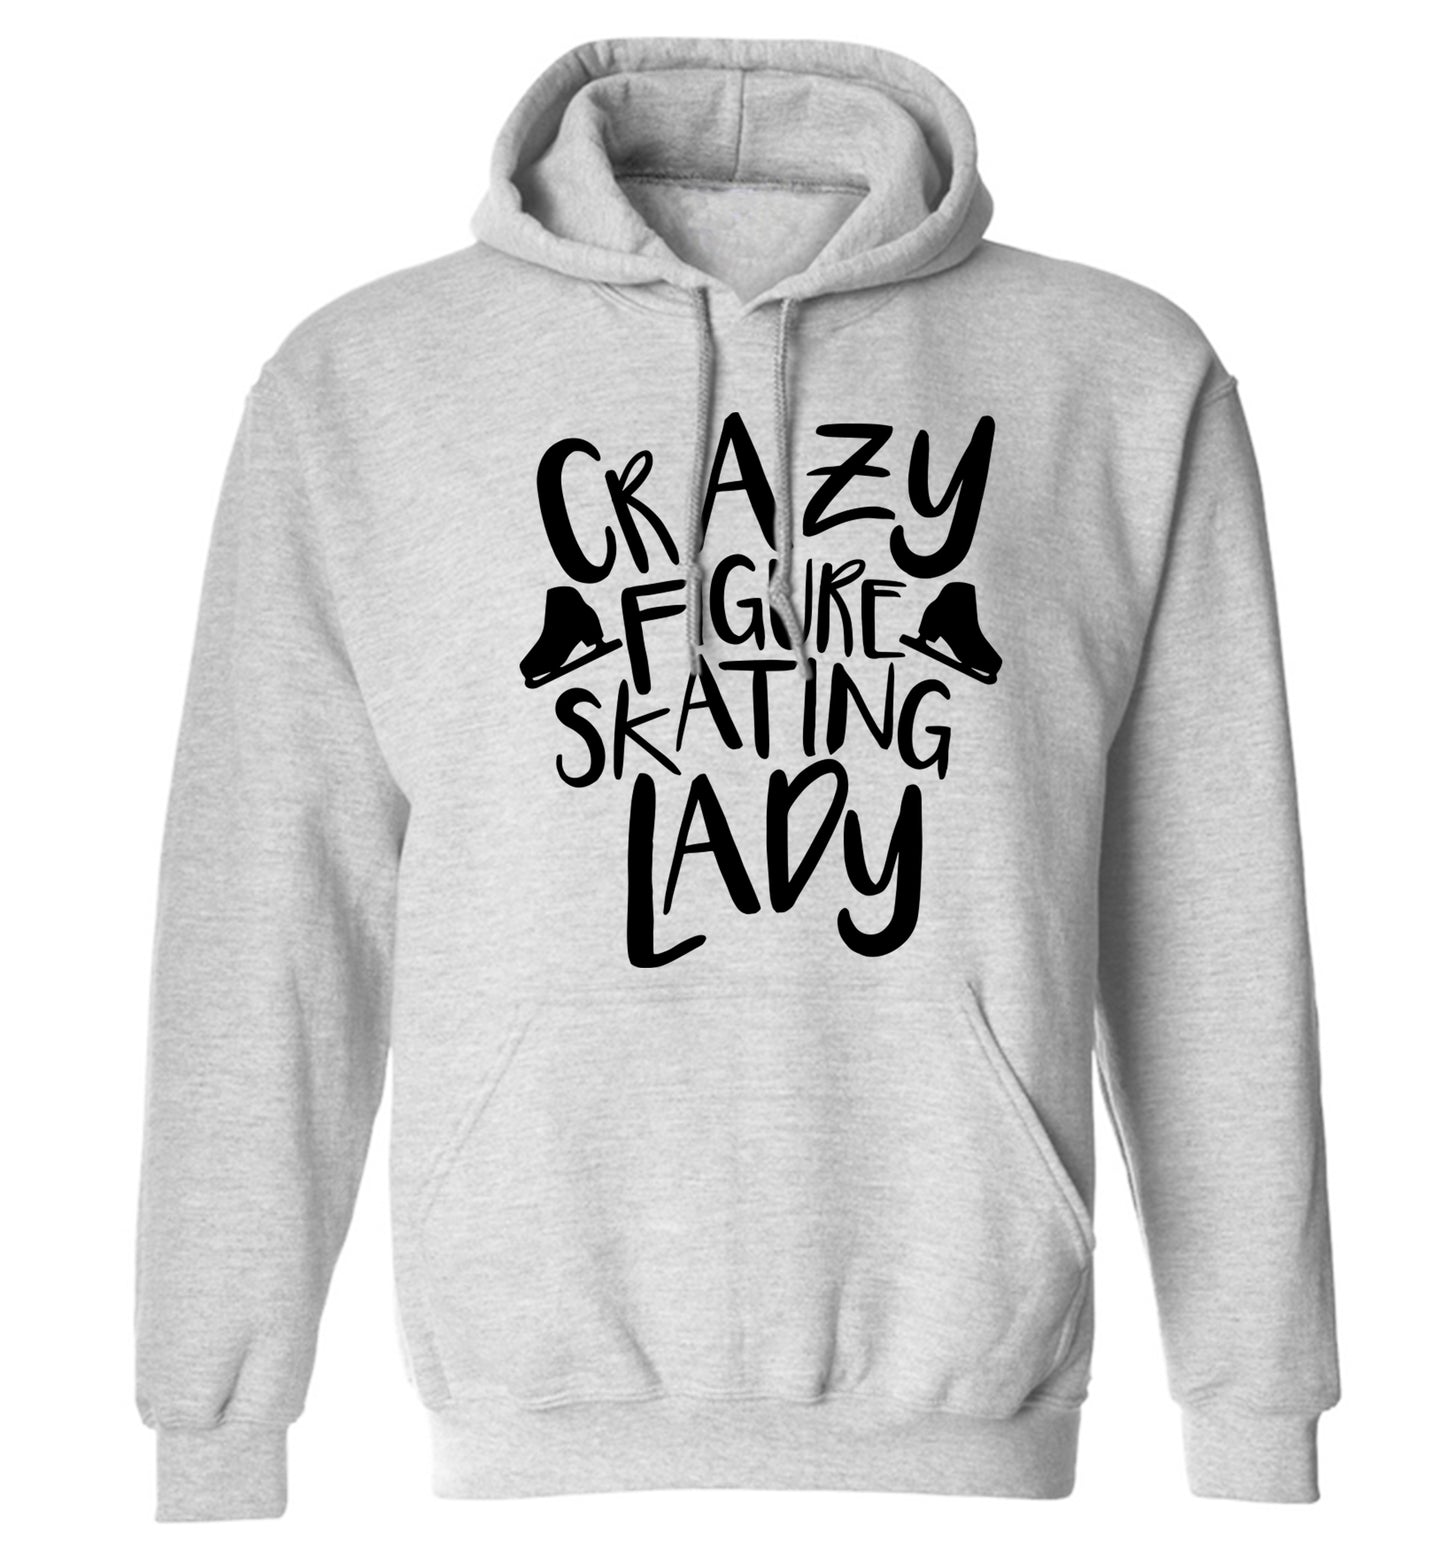 Crazy figure skating lady adults unisexgrey hoodie 2XL